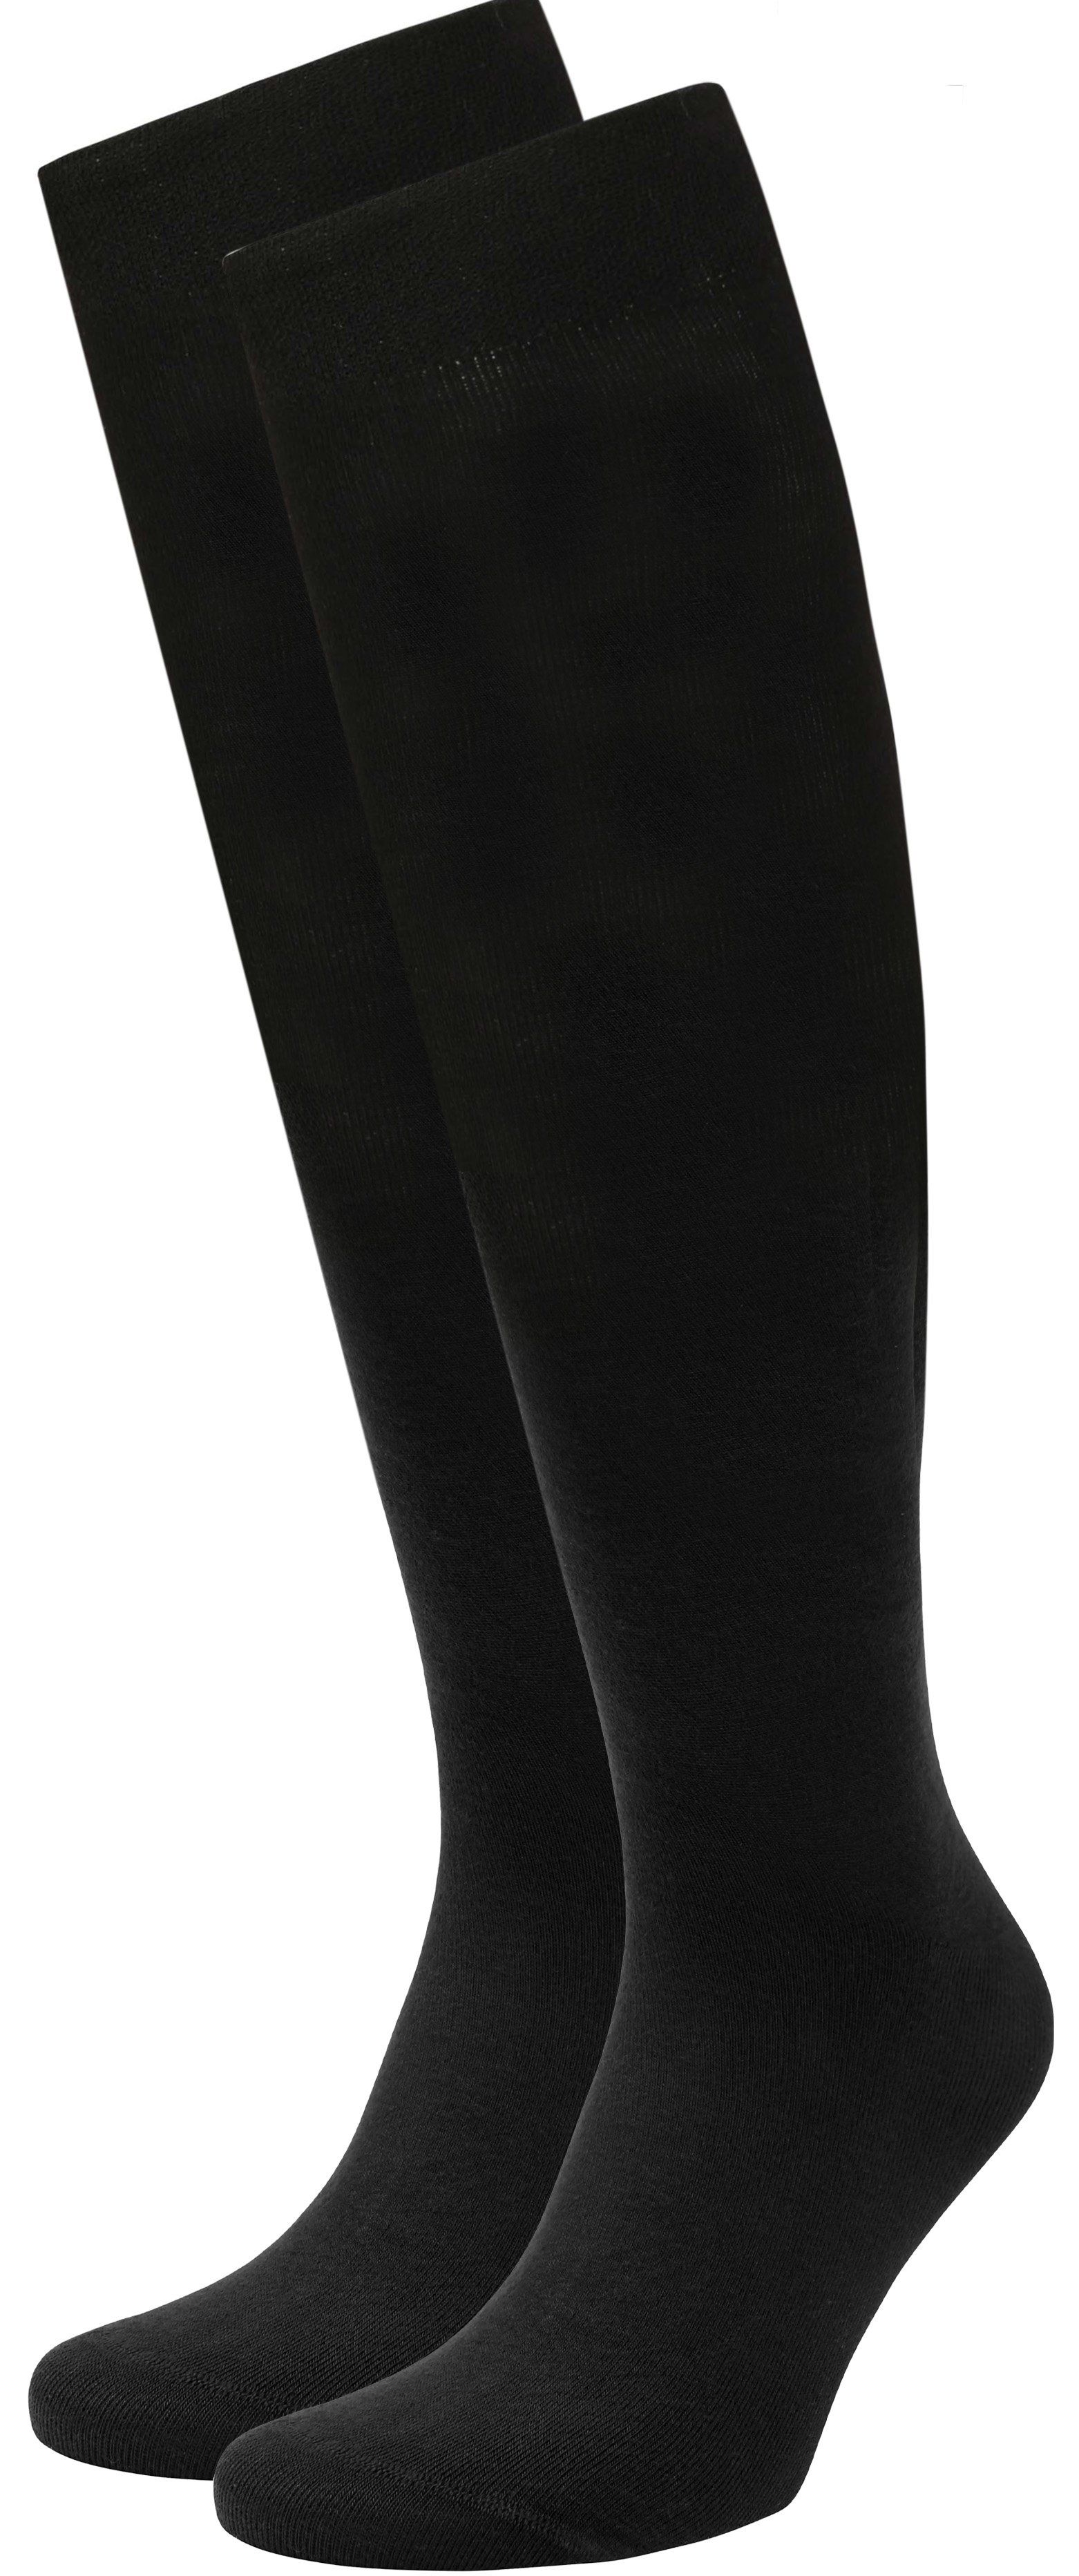 Suitable Knee-High Socks Black size 43-46 product